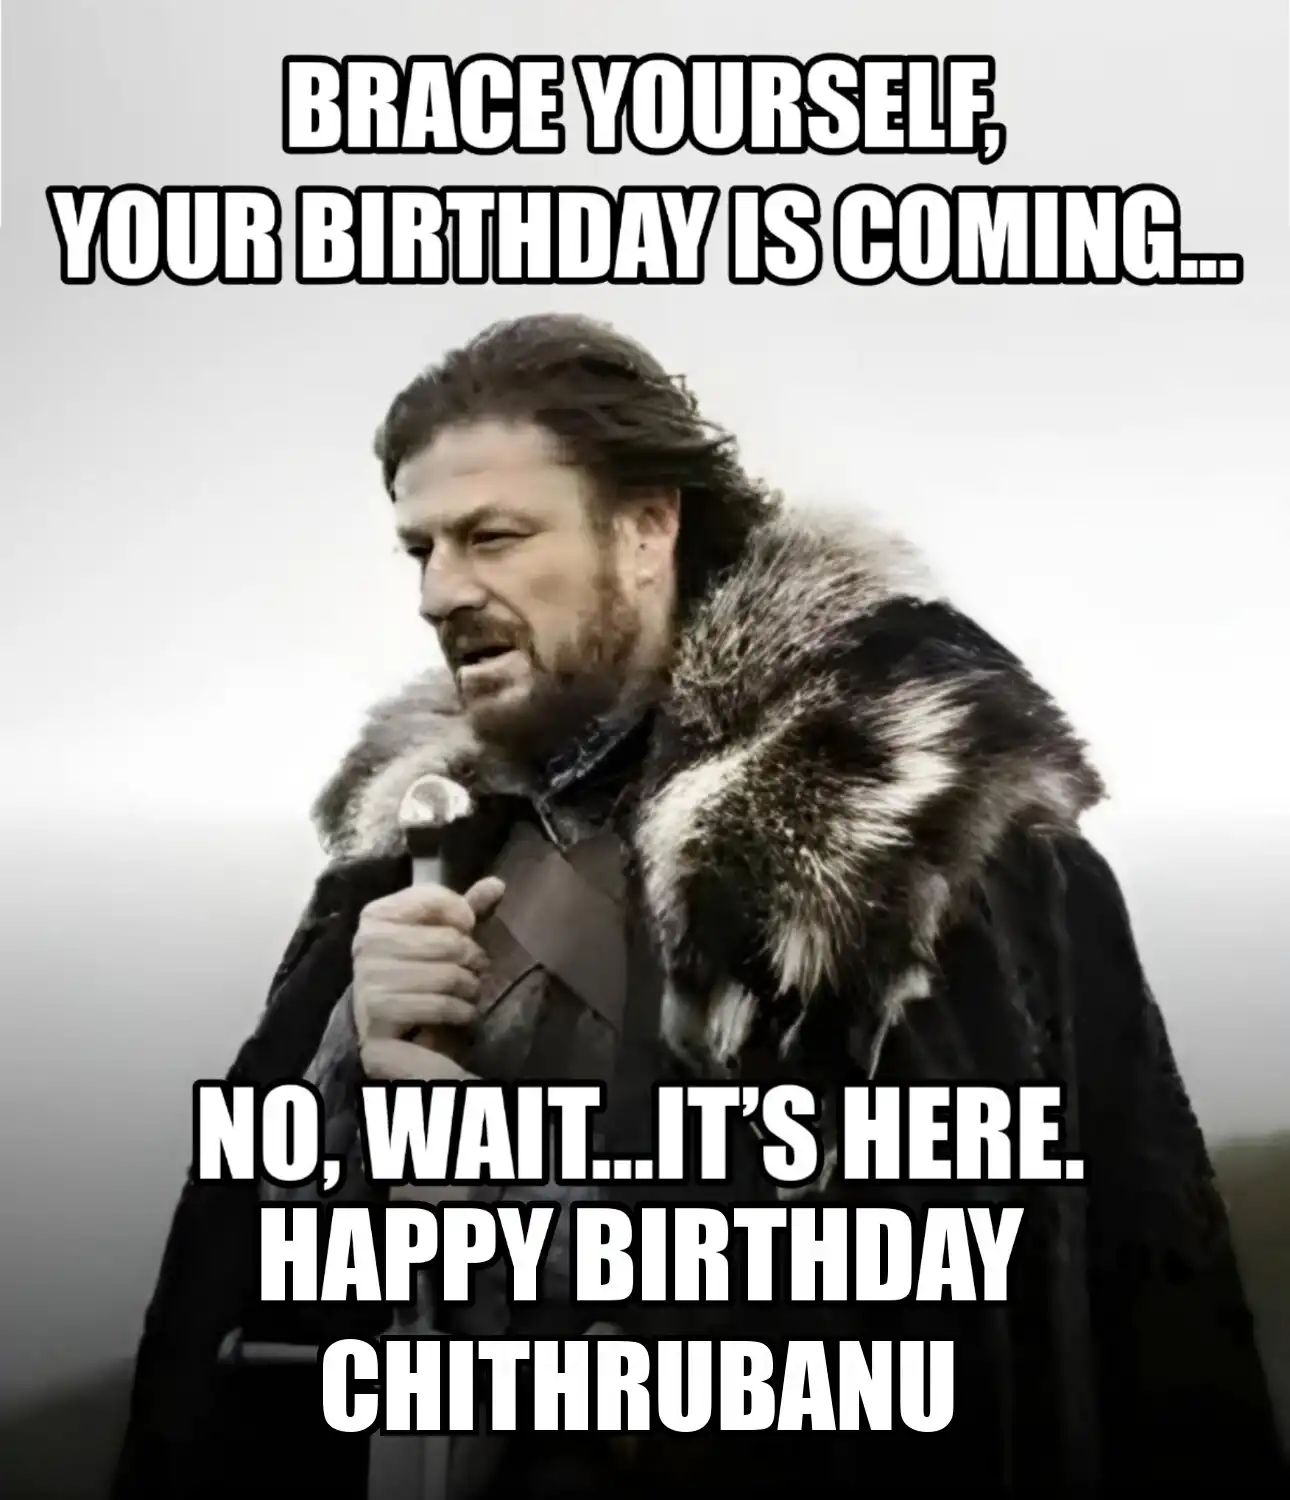 Happy Birthday Chithrubanu Brace Yourself Your Birthday Is Coming Meme